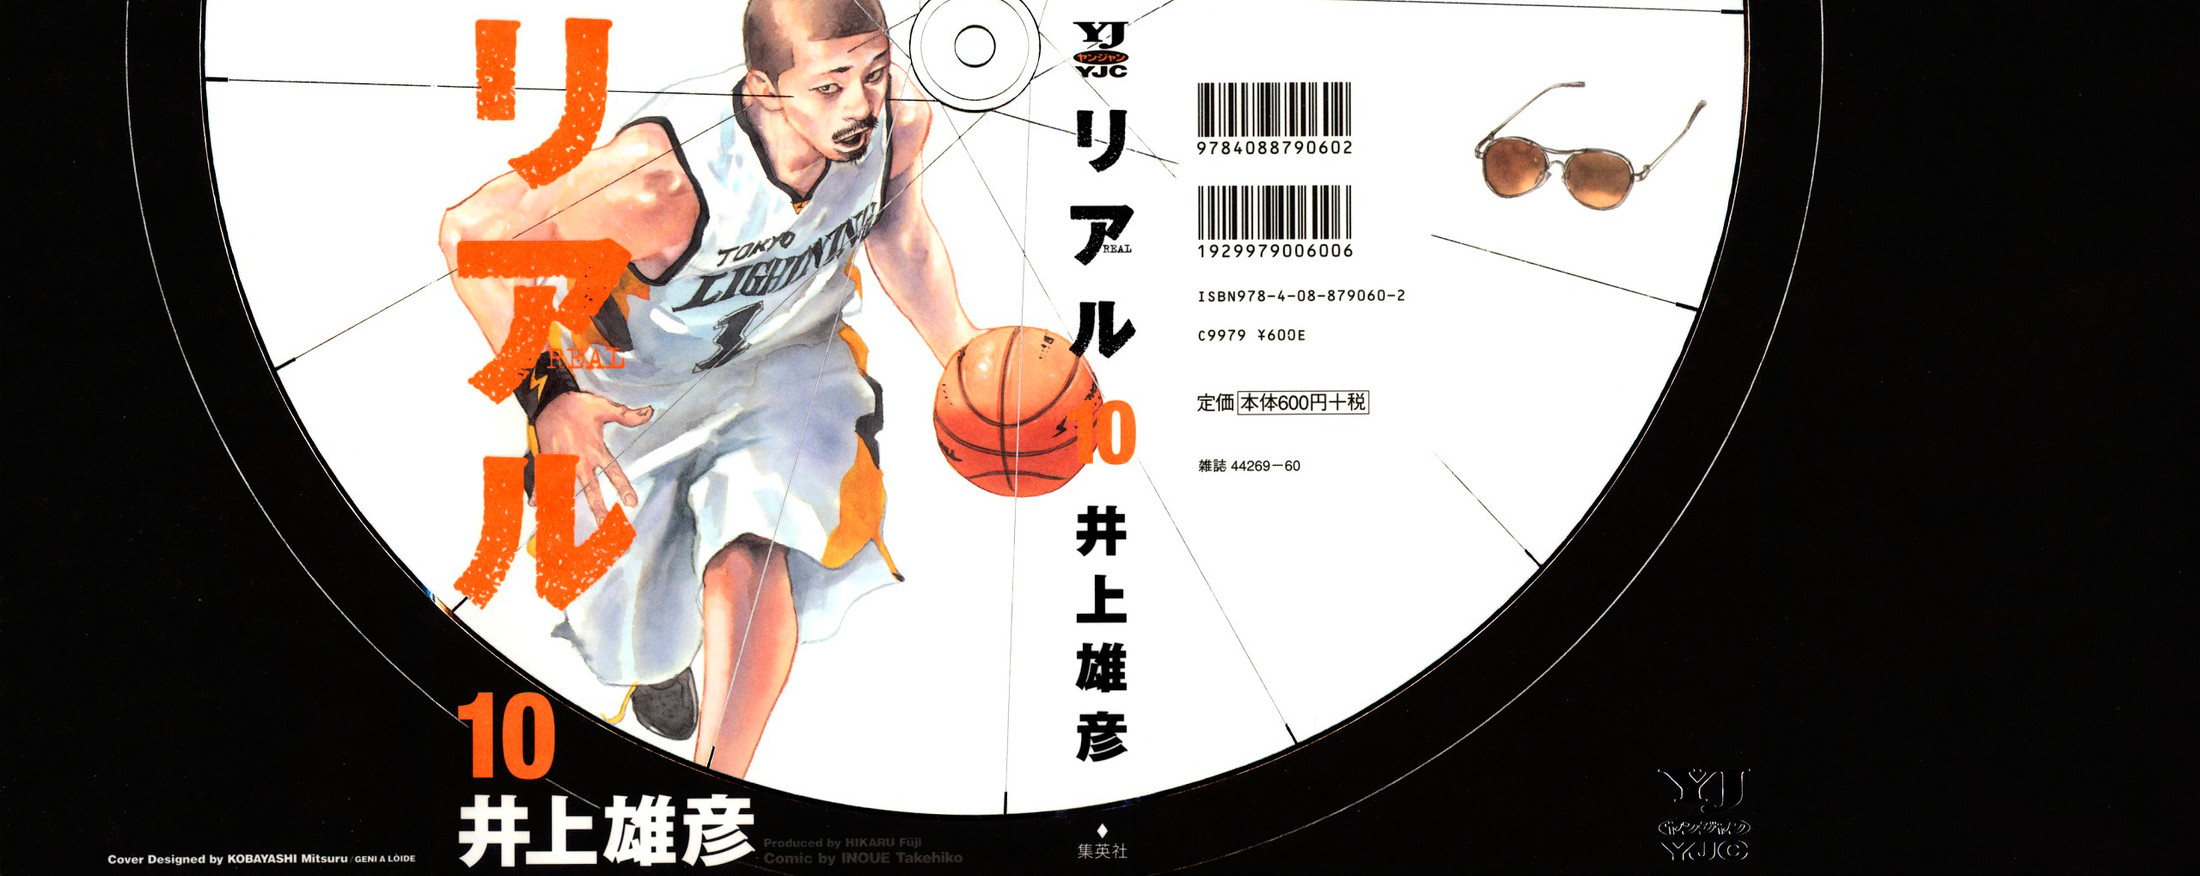 Такэхико Иноэ. Такэхико Иноуэ баскетбол. Real Manga. Real Manga Cover. Эта игра слишком реальна манга 32